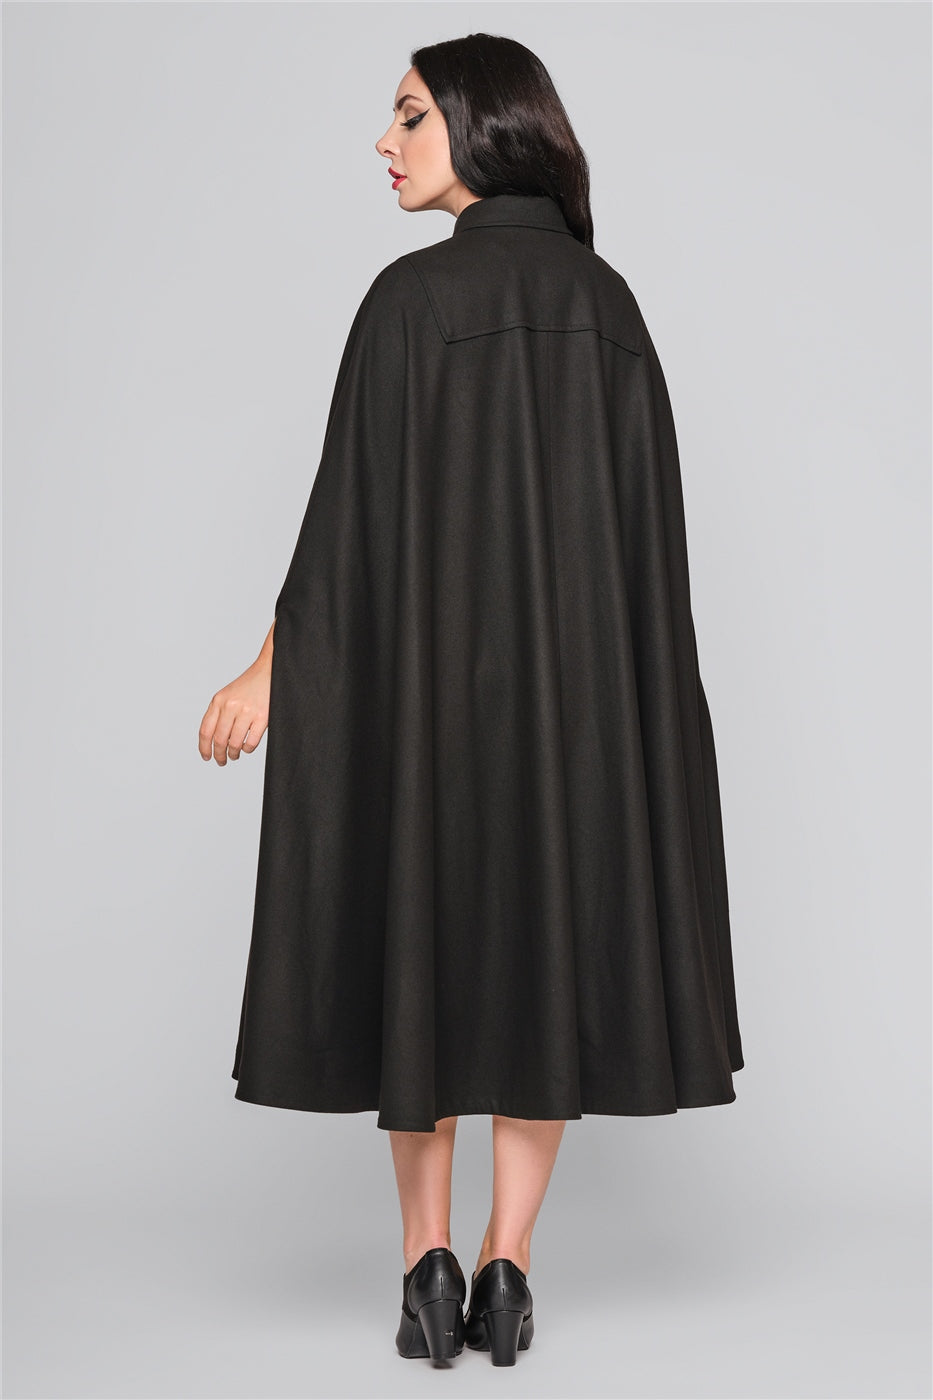 Dark haired woman wearing an elegant long black vintage style cape